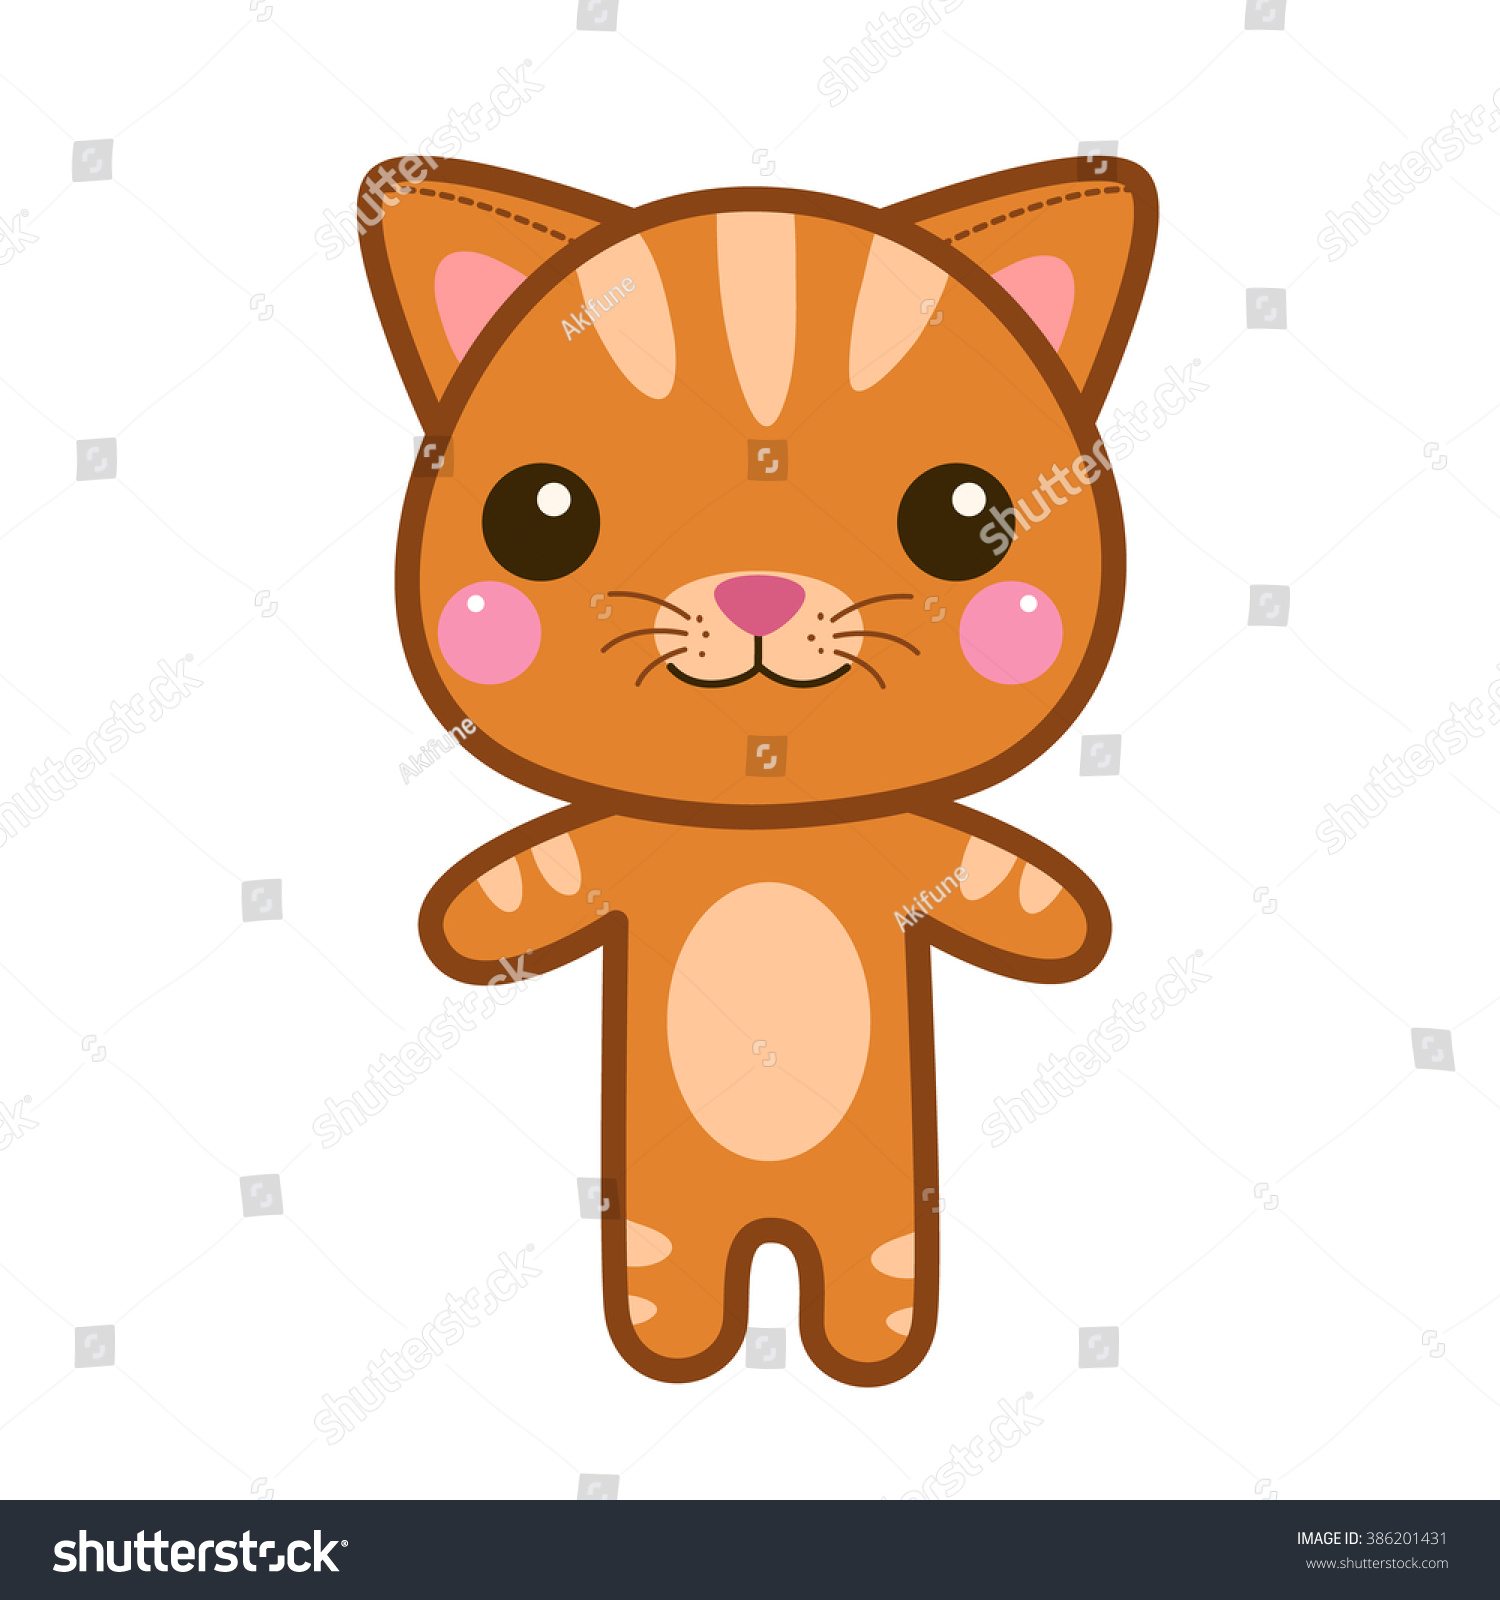 Cute Orange Tabby Cat Cartoon Character Stock Vector Royalty Free Shutterstock